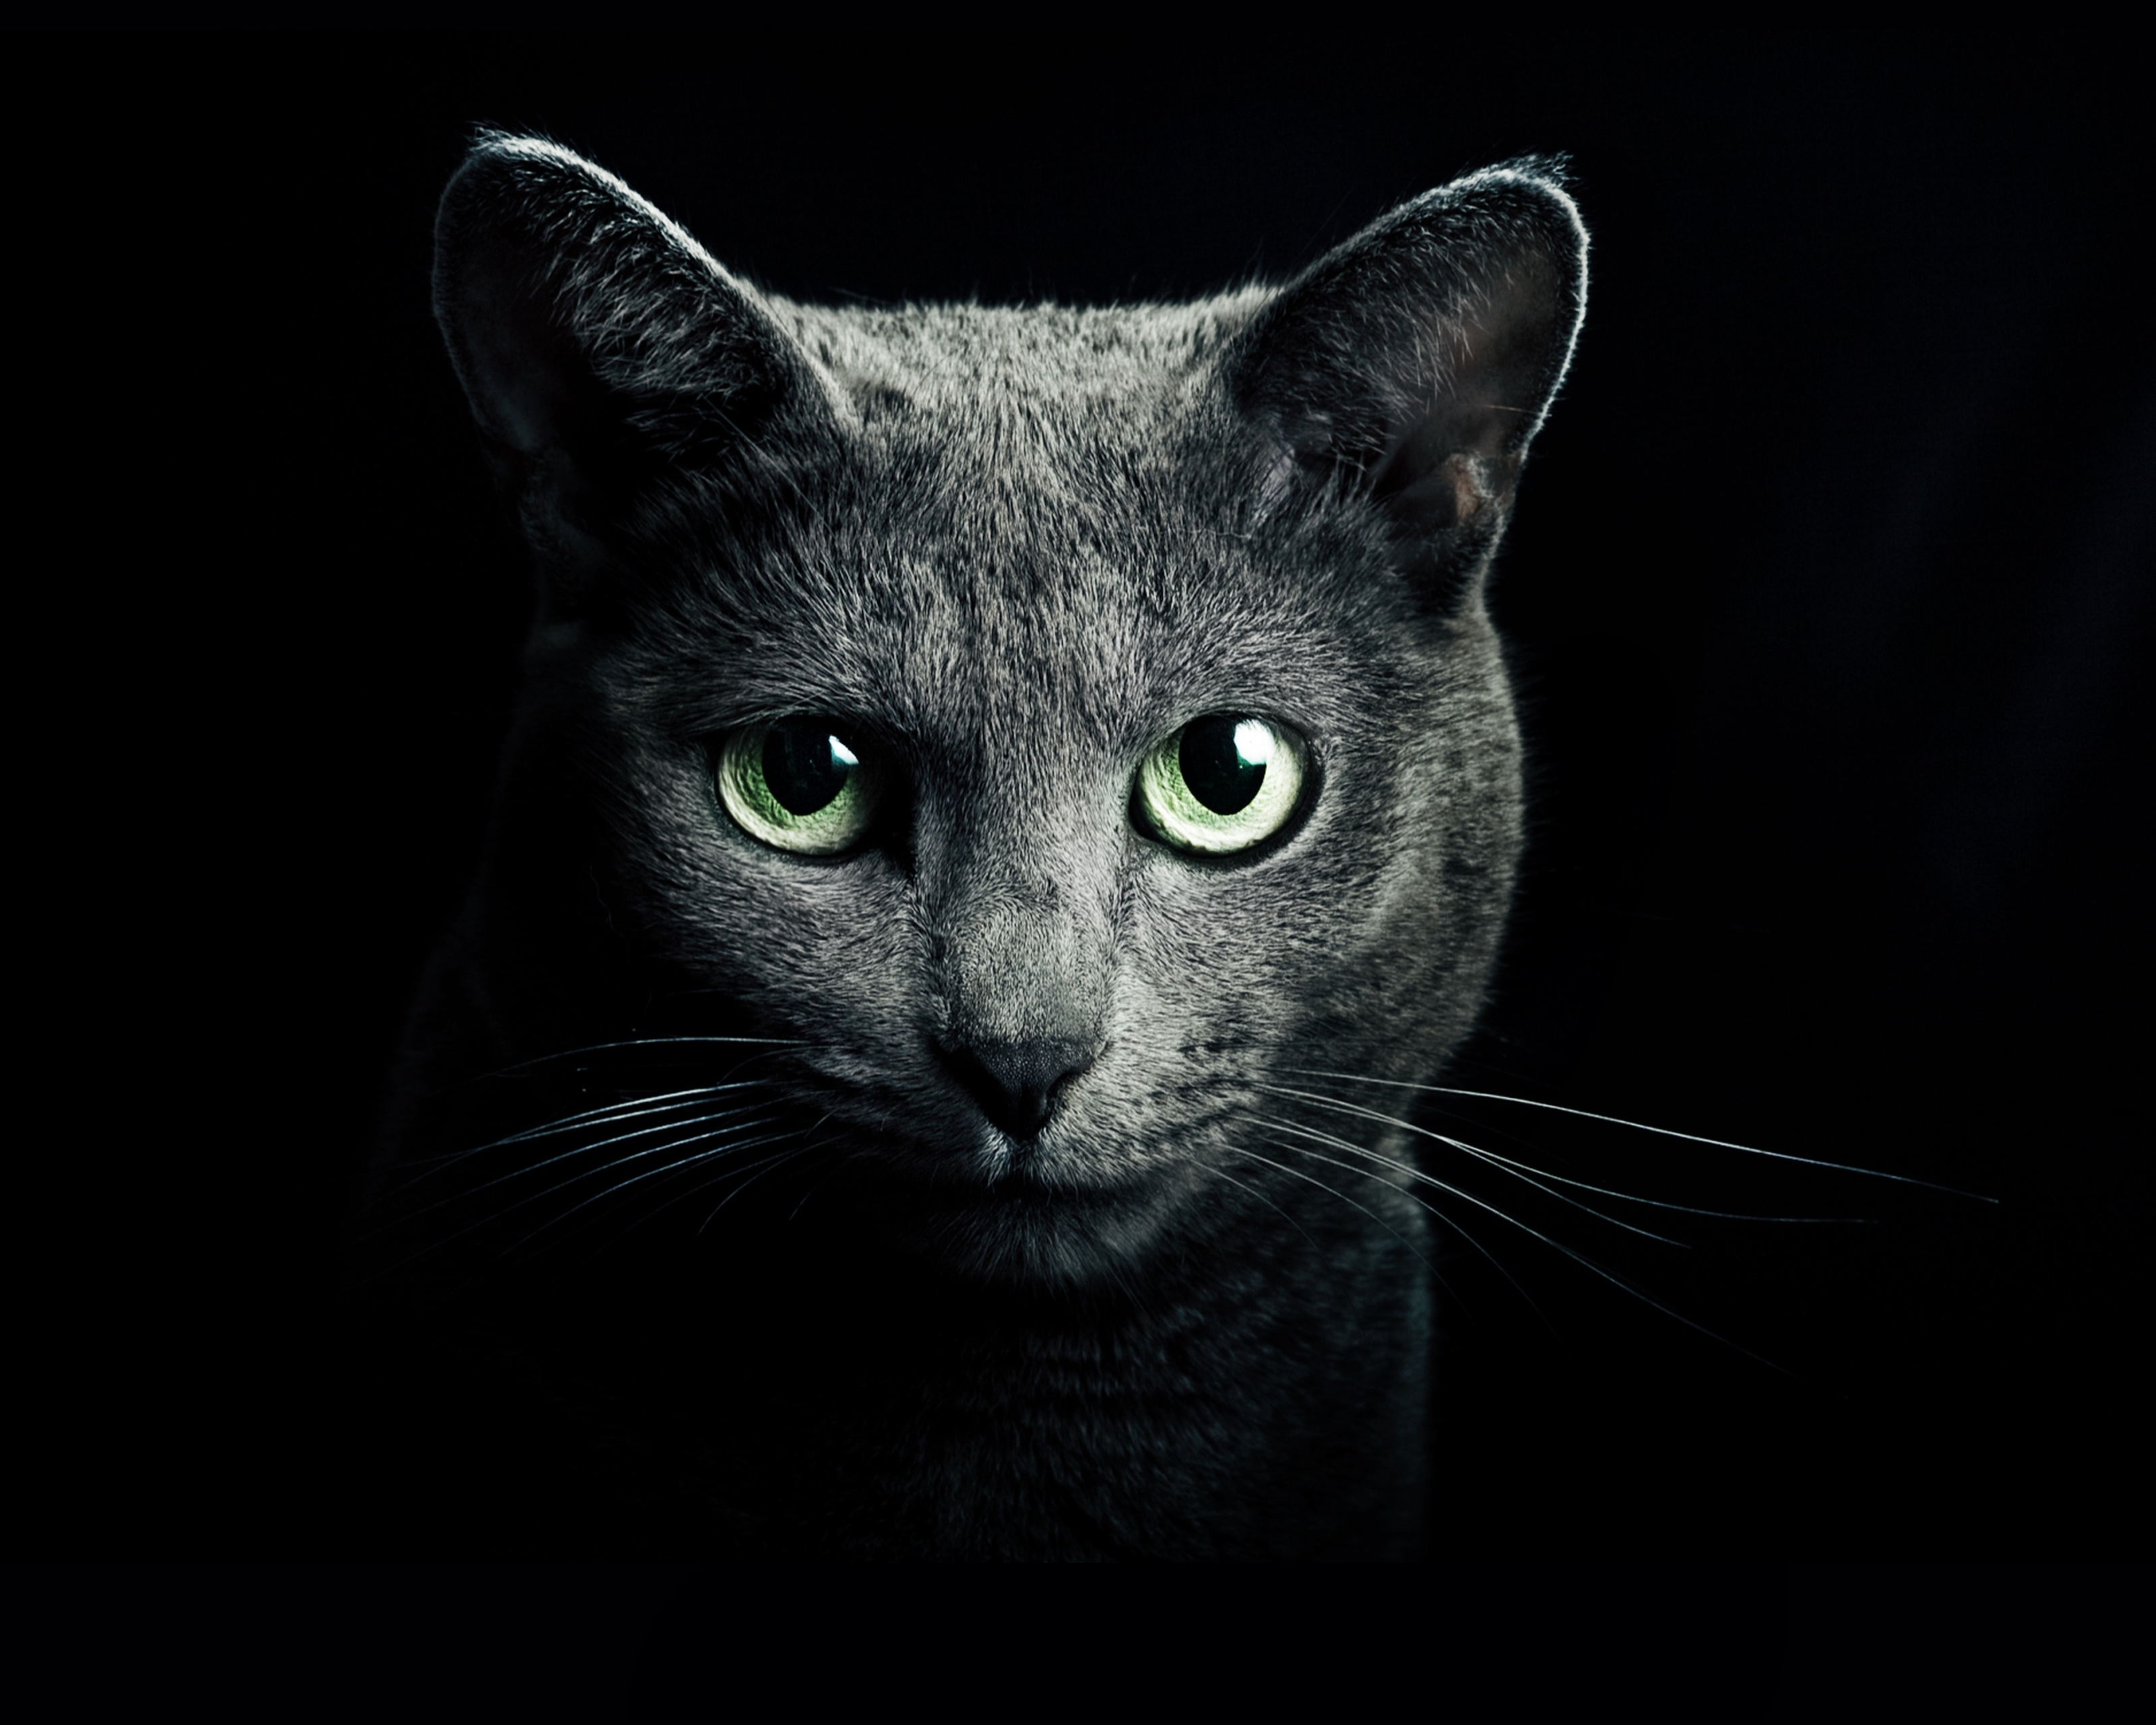 1140258 descargar imagen animales, gato, cabeza, gatos: fondos de pantalla y protectores de pantalla gratis